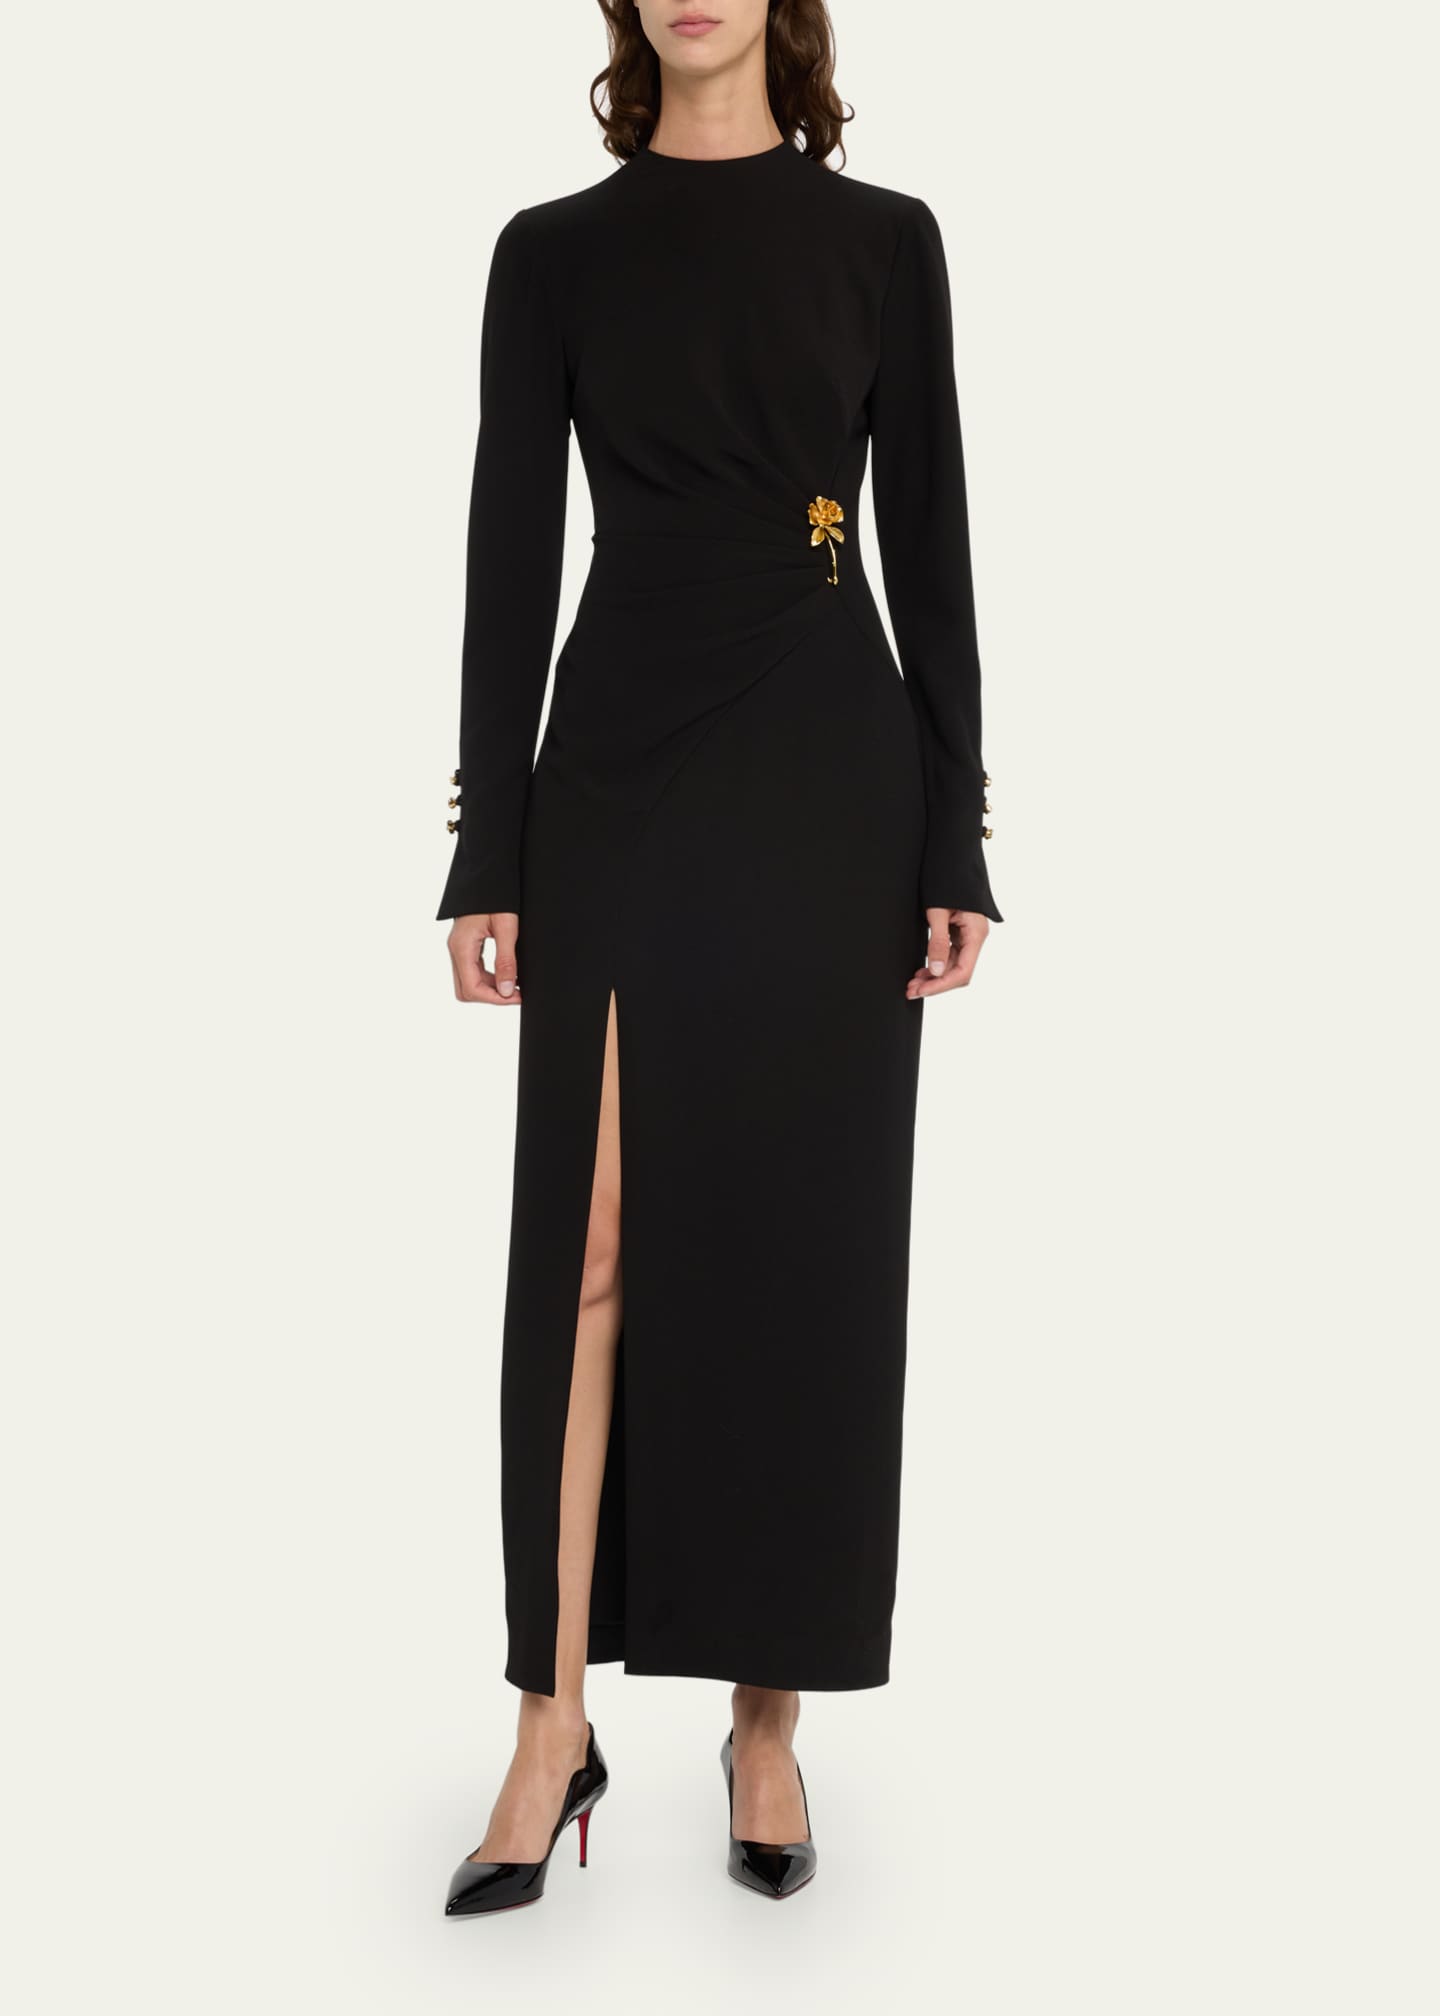 Lela Rose Draped Sheath Dress with Gold-Tone Detail - Bergdorf Goodman